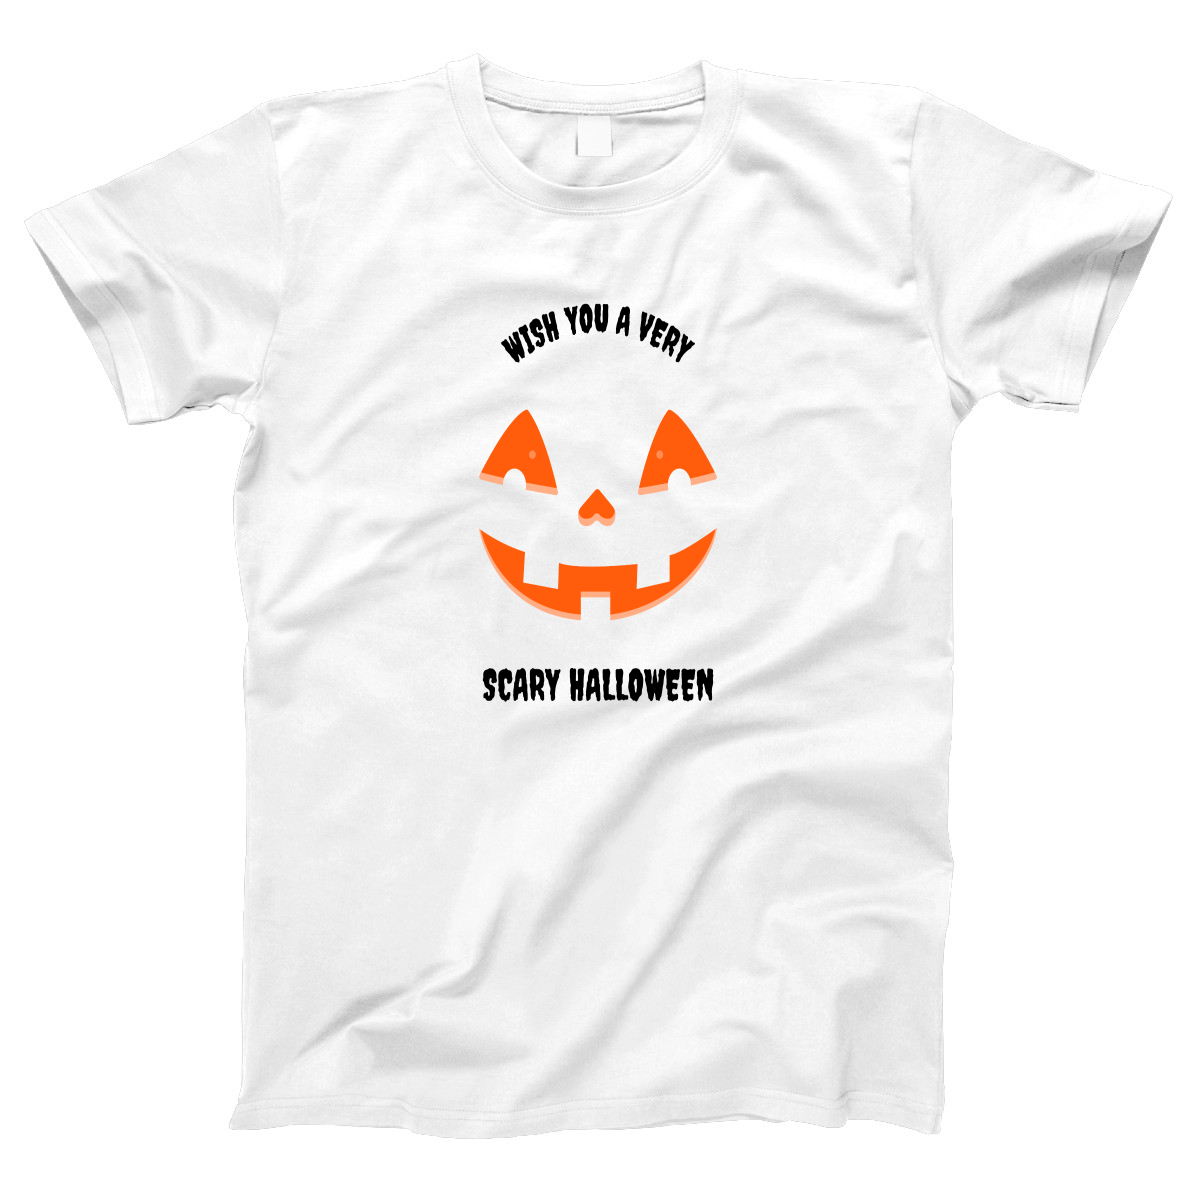 Wish You a Very Scary Halloween Women's T-shirt | White